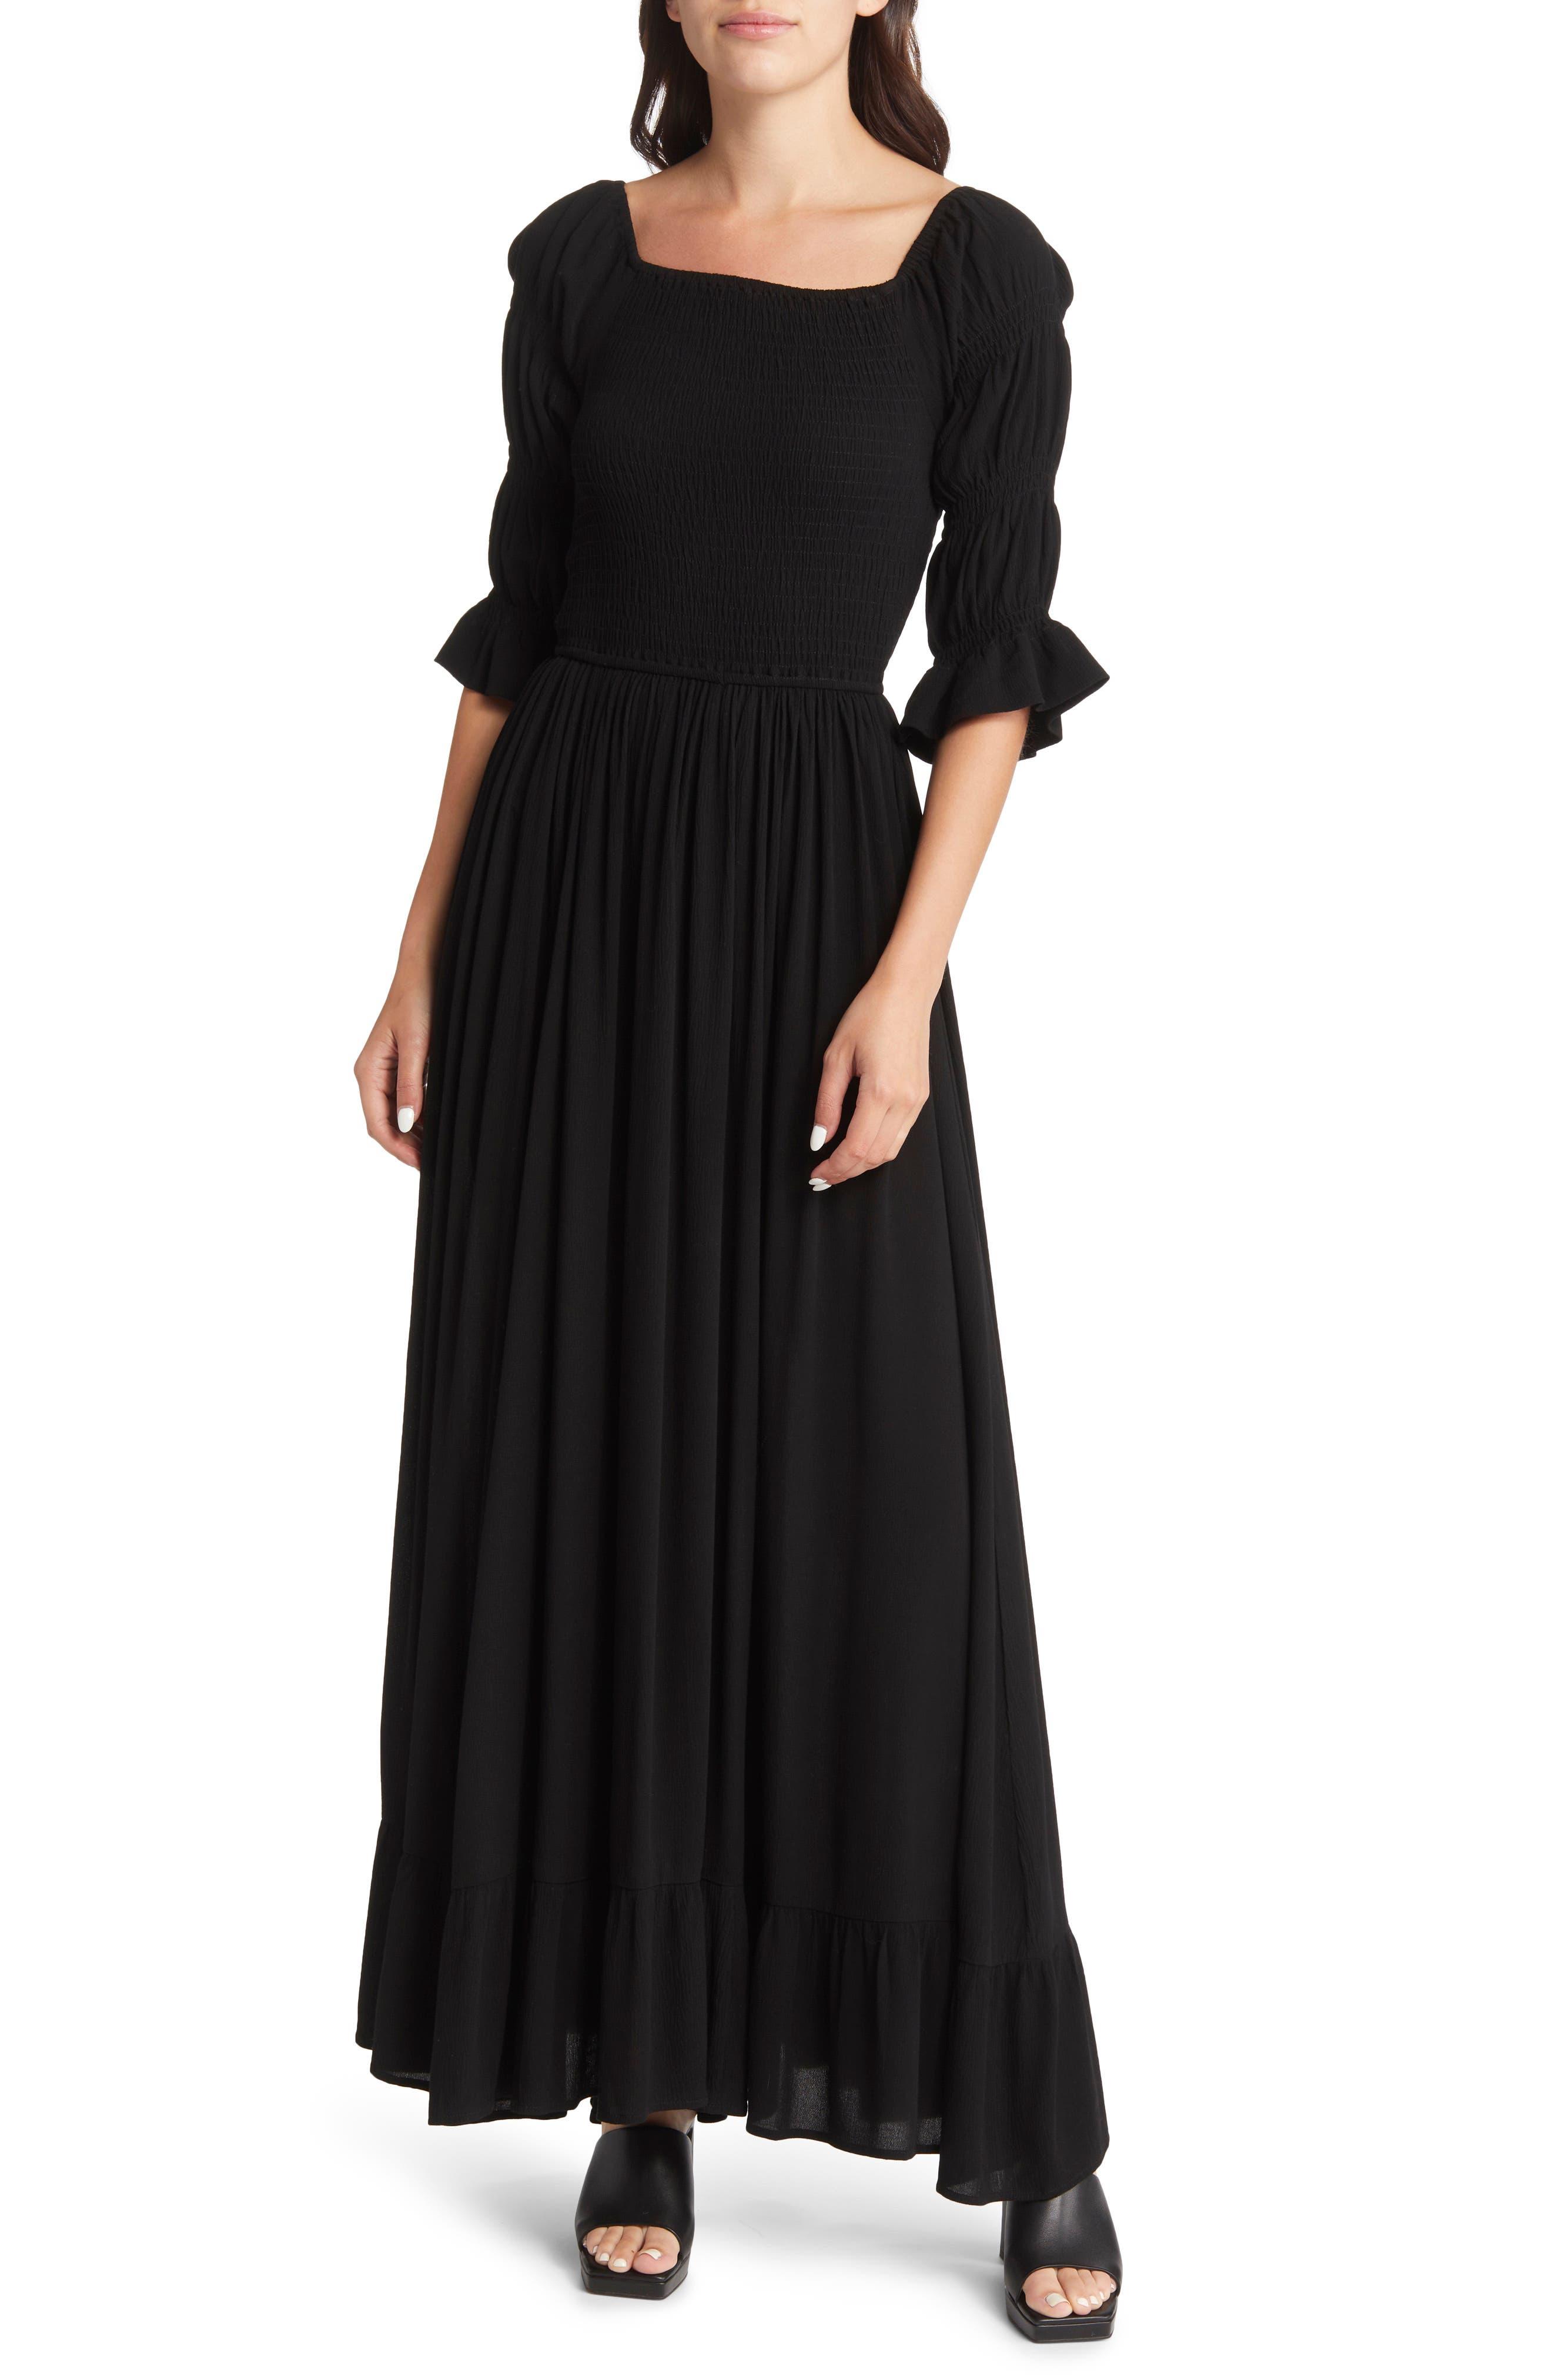 AREA STARS Smocked Bodice Maxi Dress in Black | Lyst